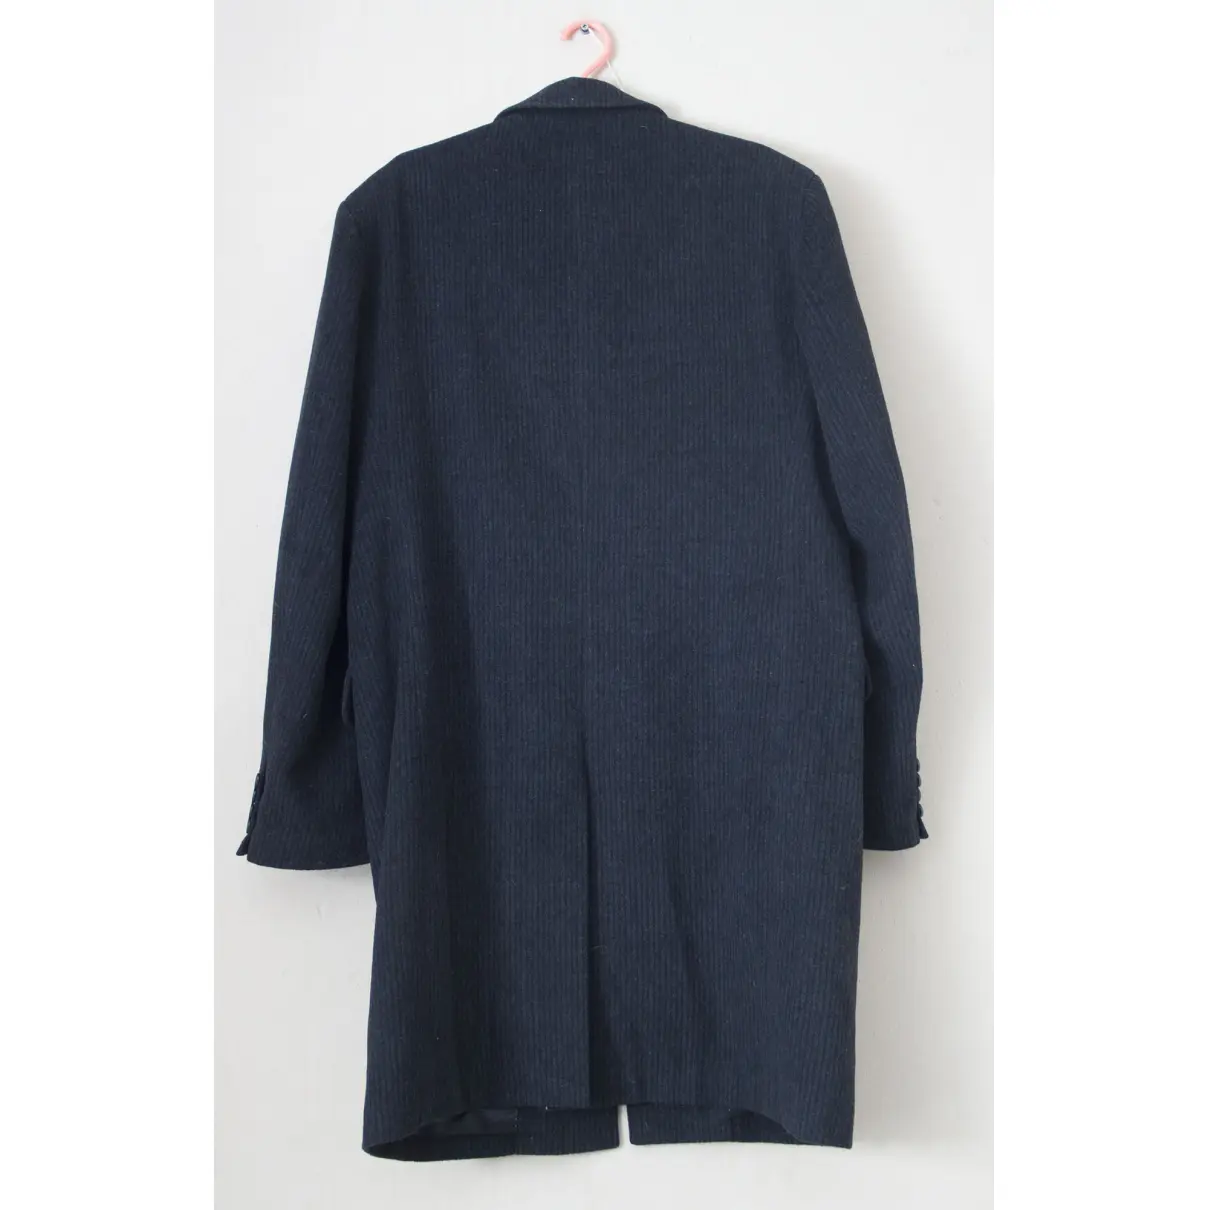 Buy Giorgio Armani Cashmere coat online - Vintage